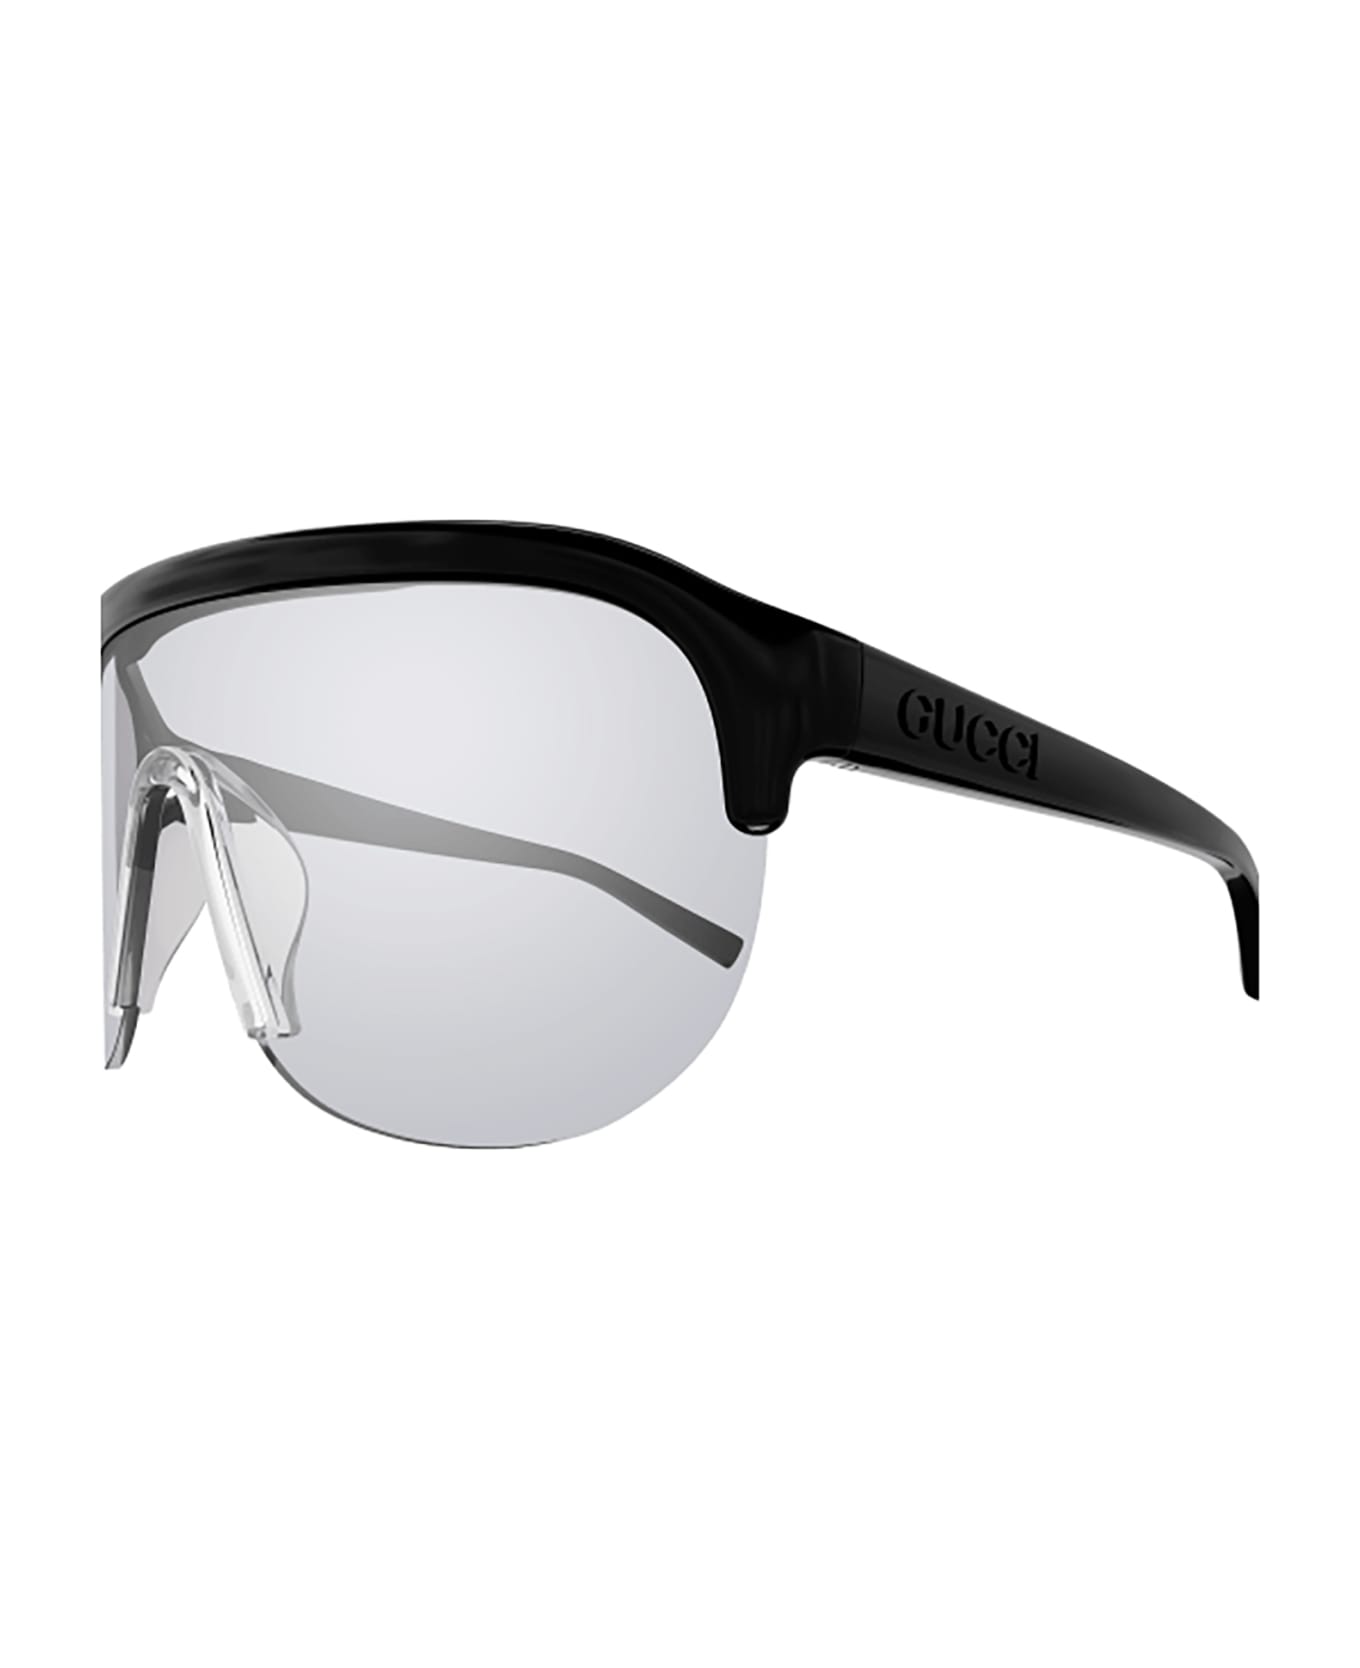 Gucci Eyewear GG1645S Sunglasses - Black Black Silver